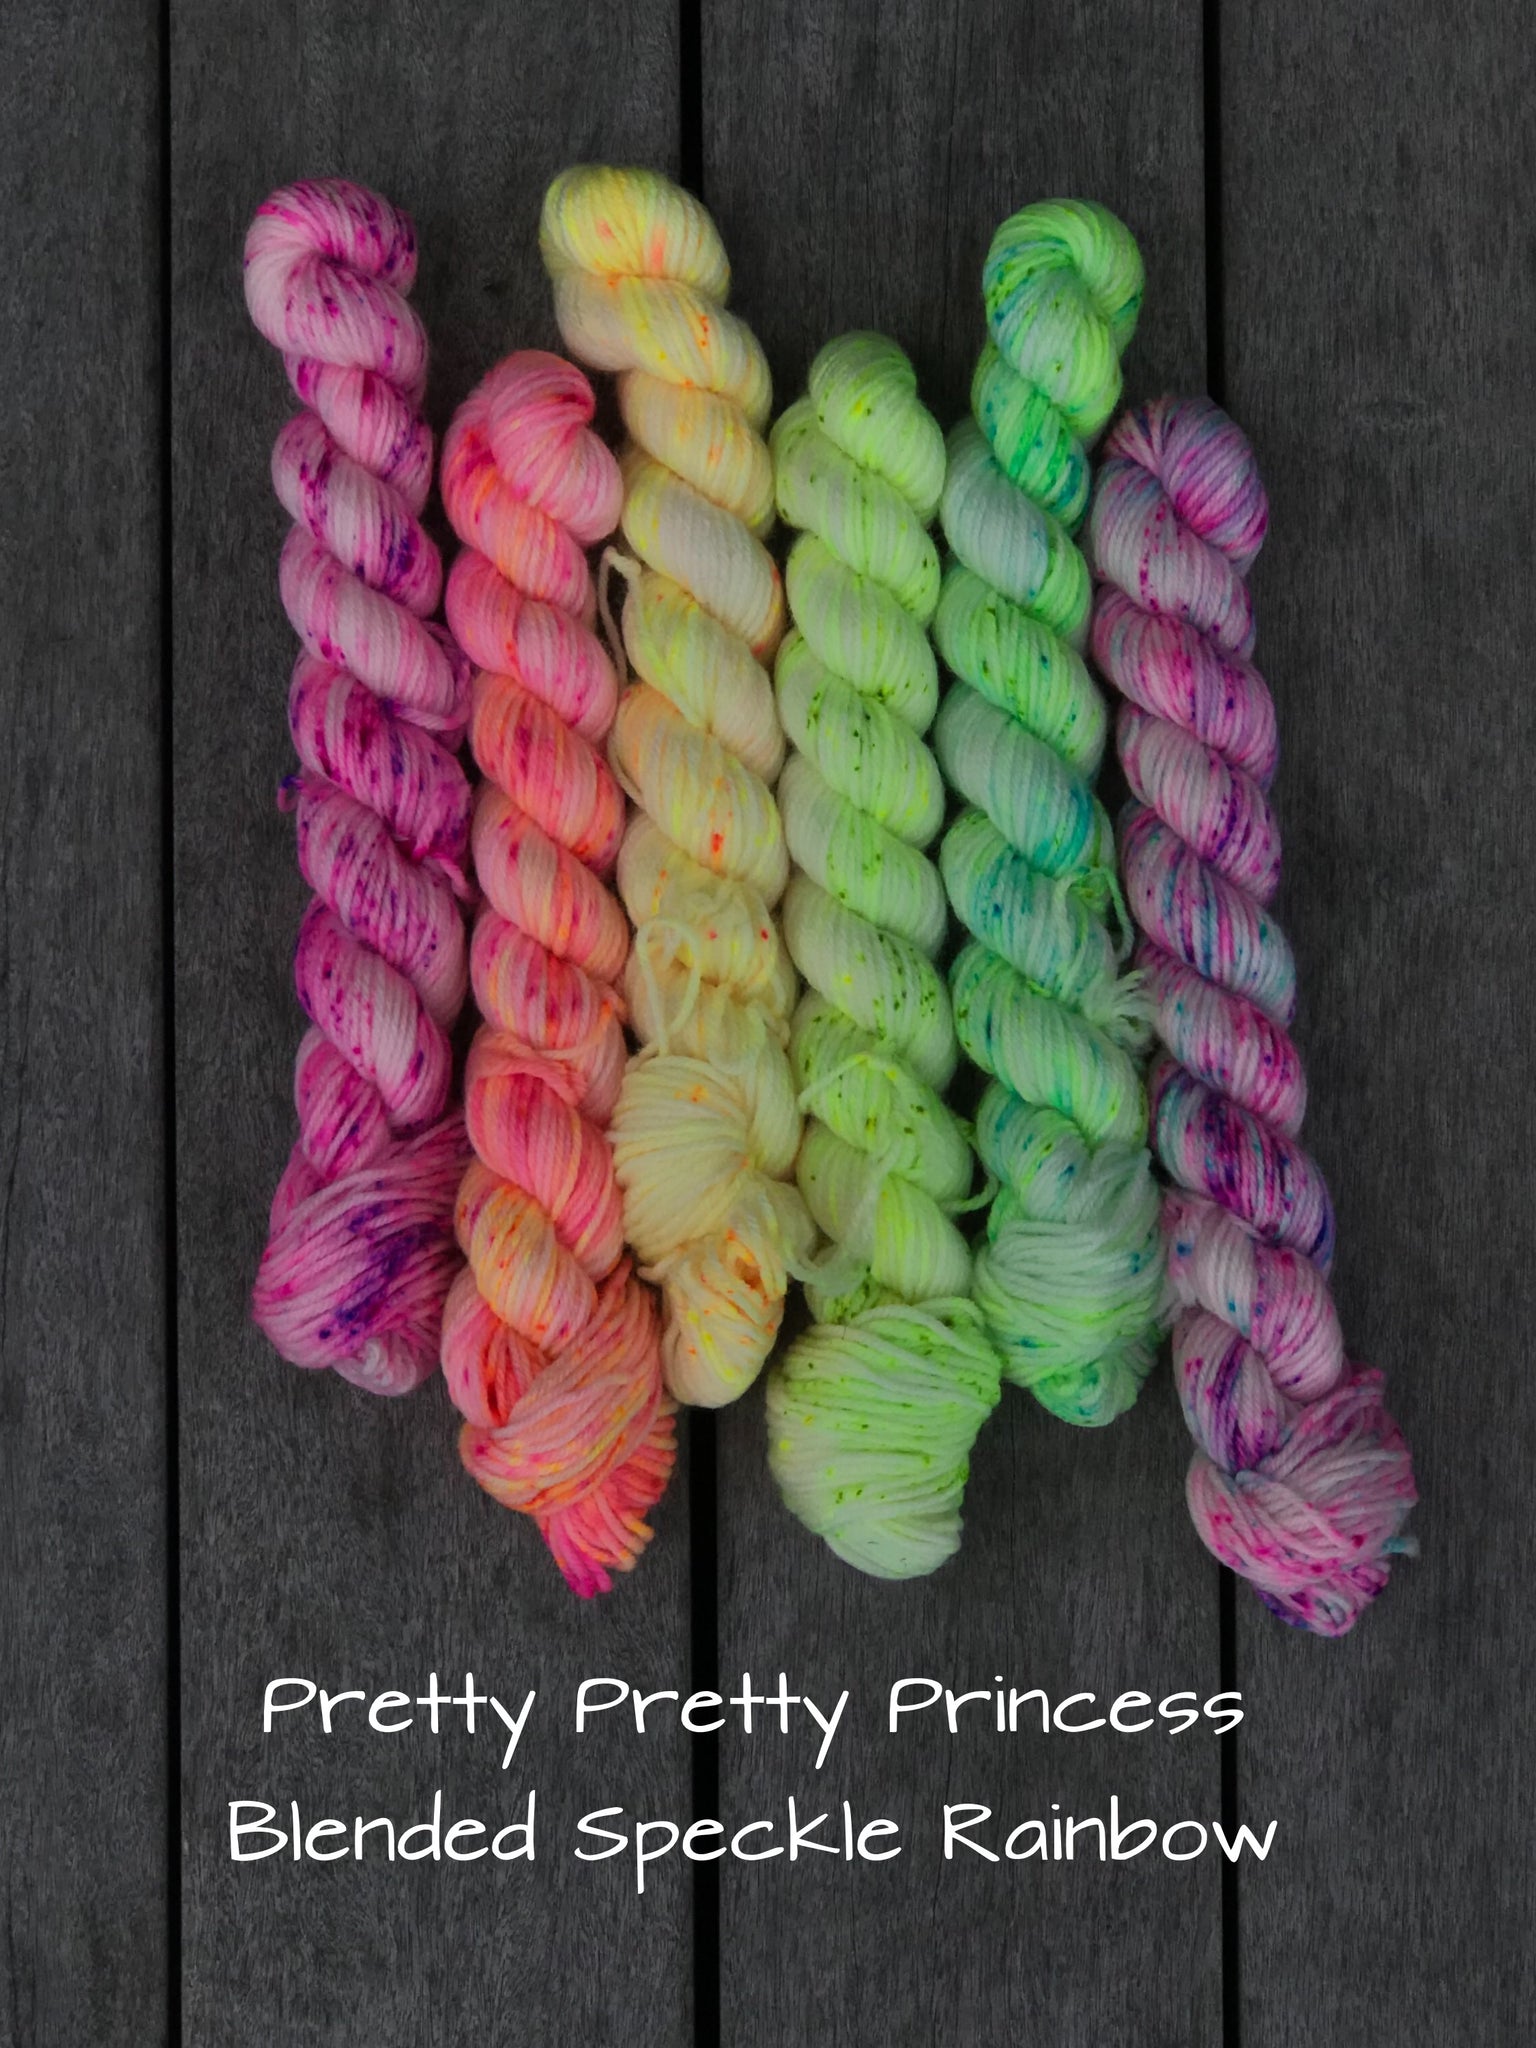 Unicorn Pastel Rainbow mini yarn set of 6 solid colored mini